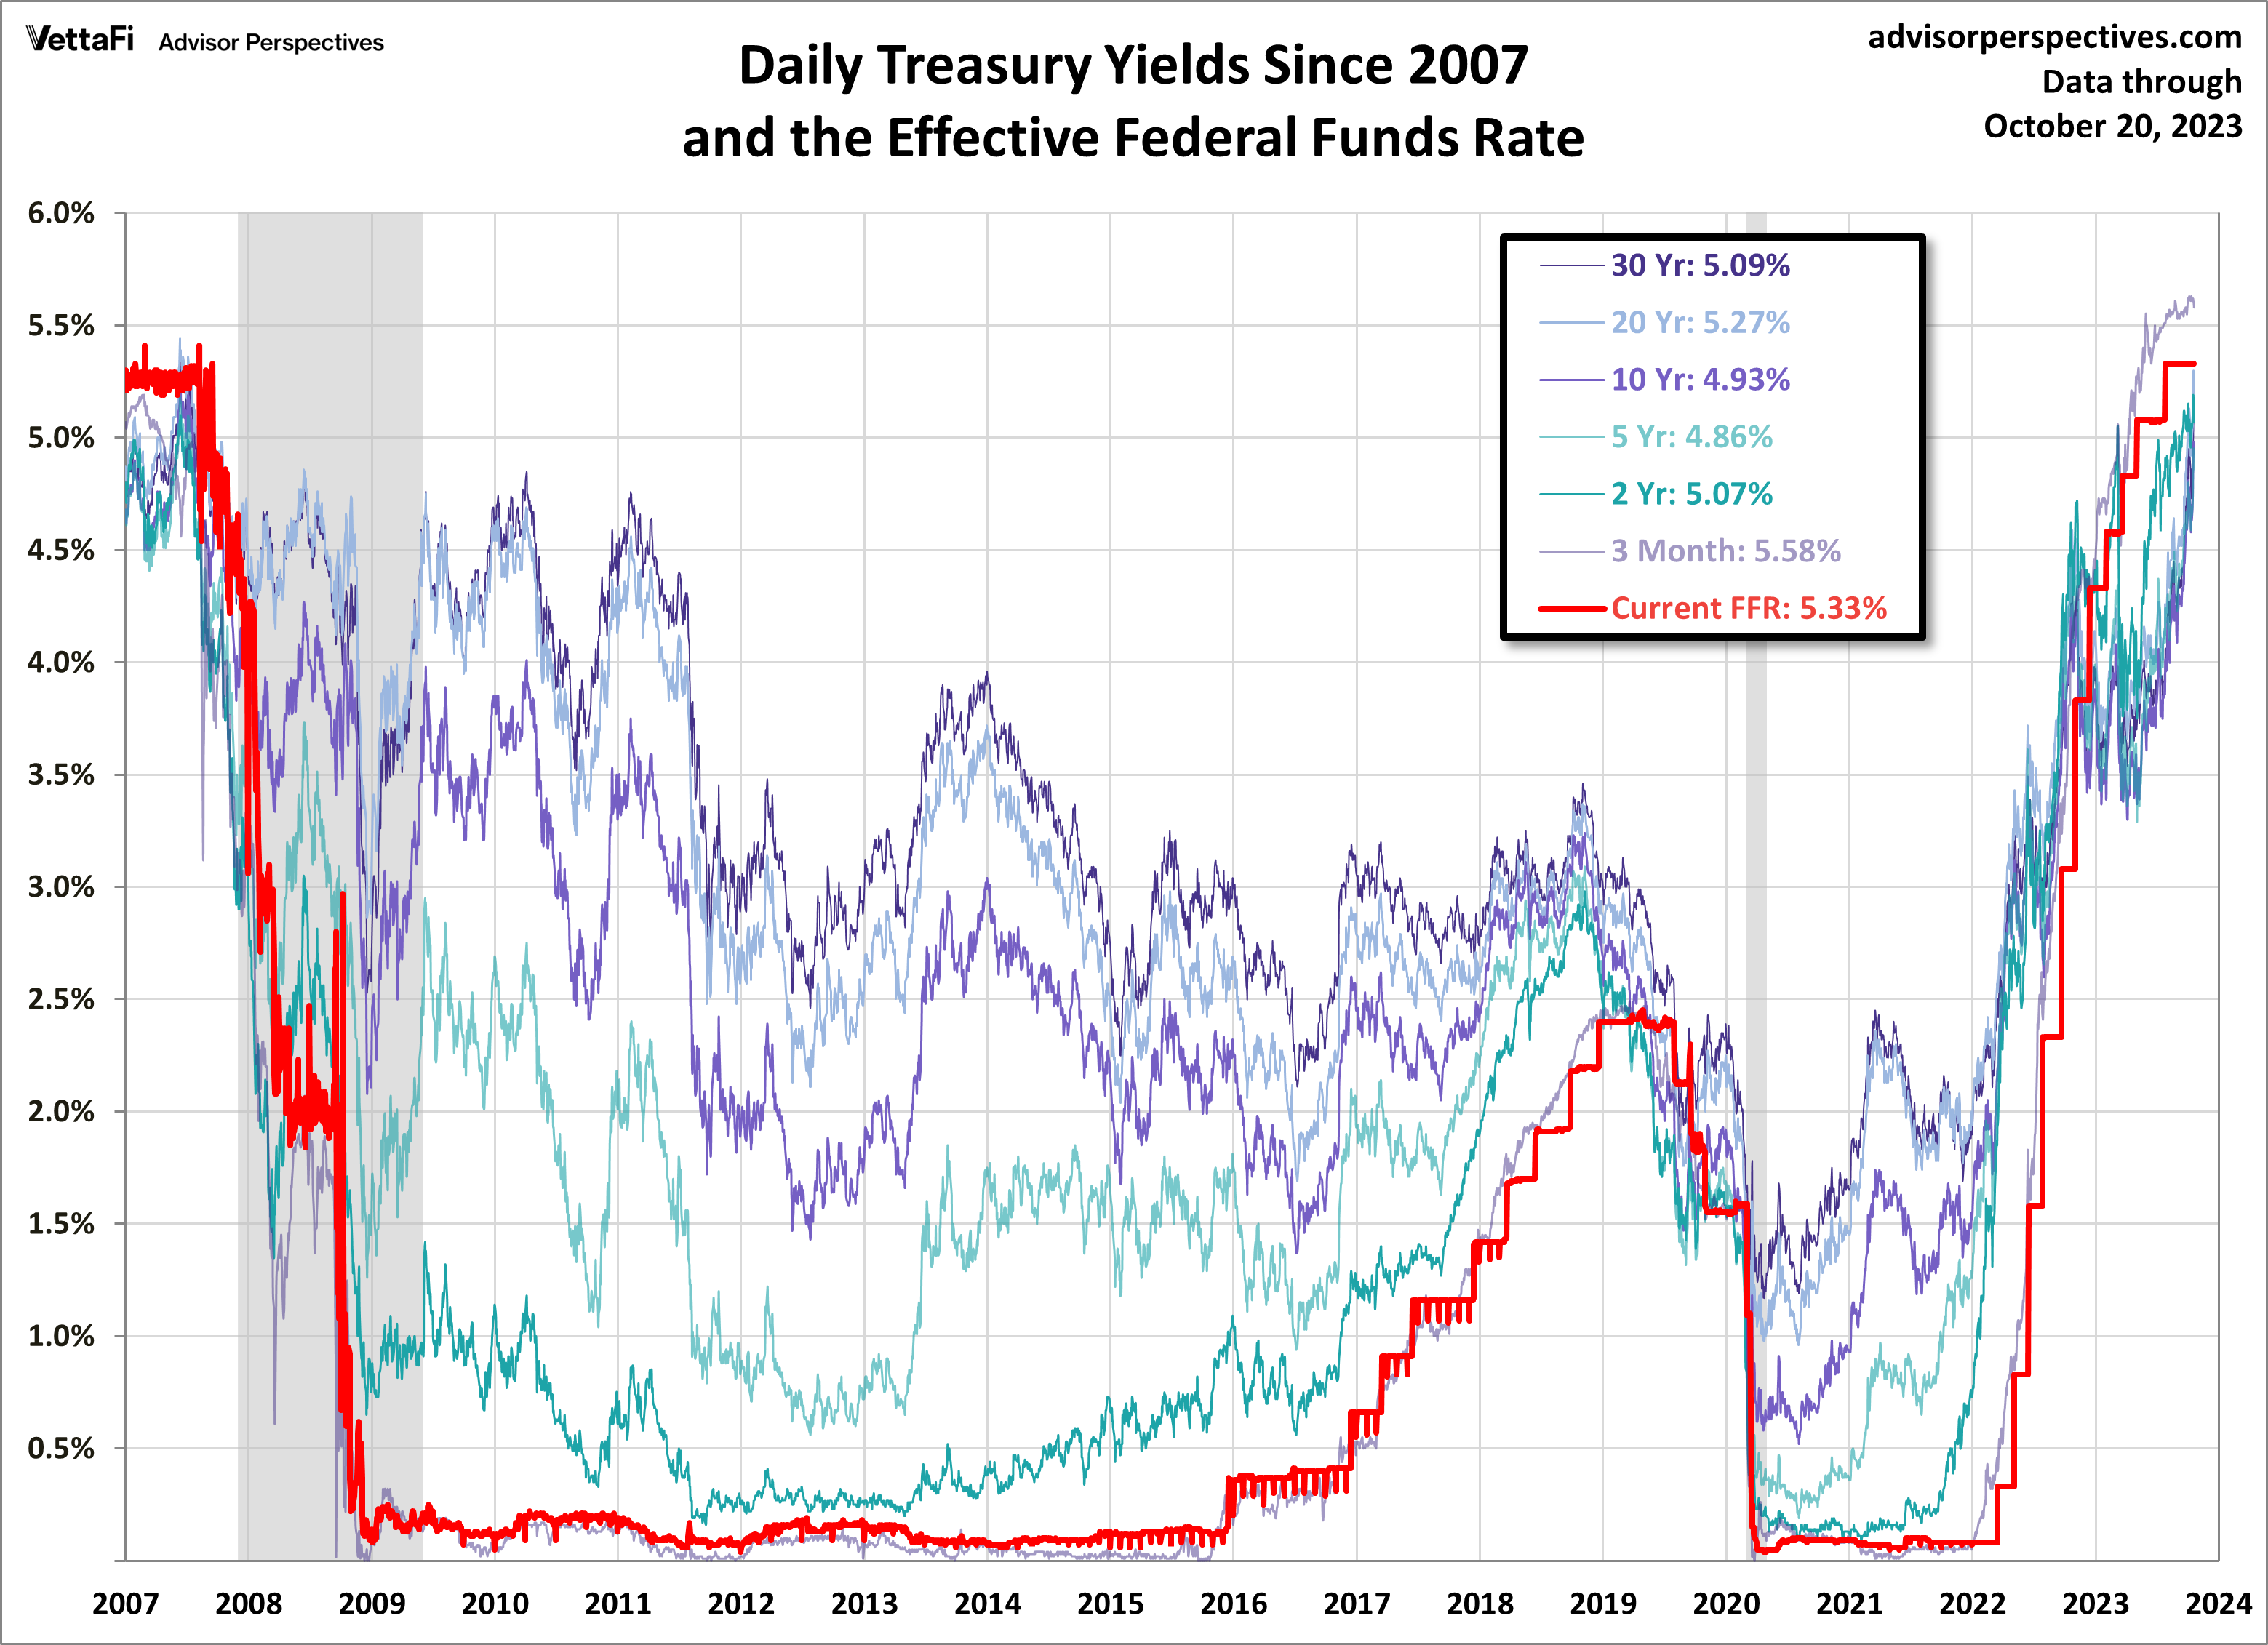 Daily Treasury Yield Since 2007